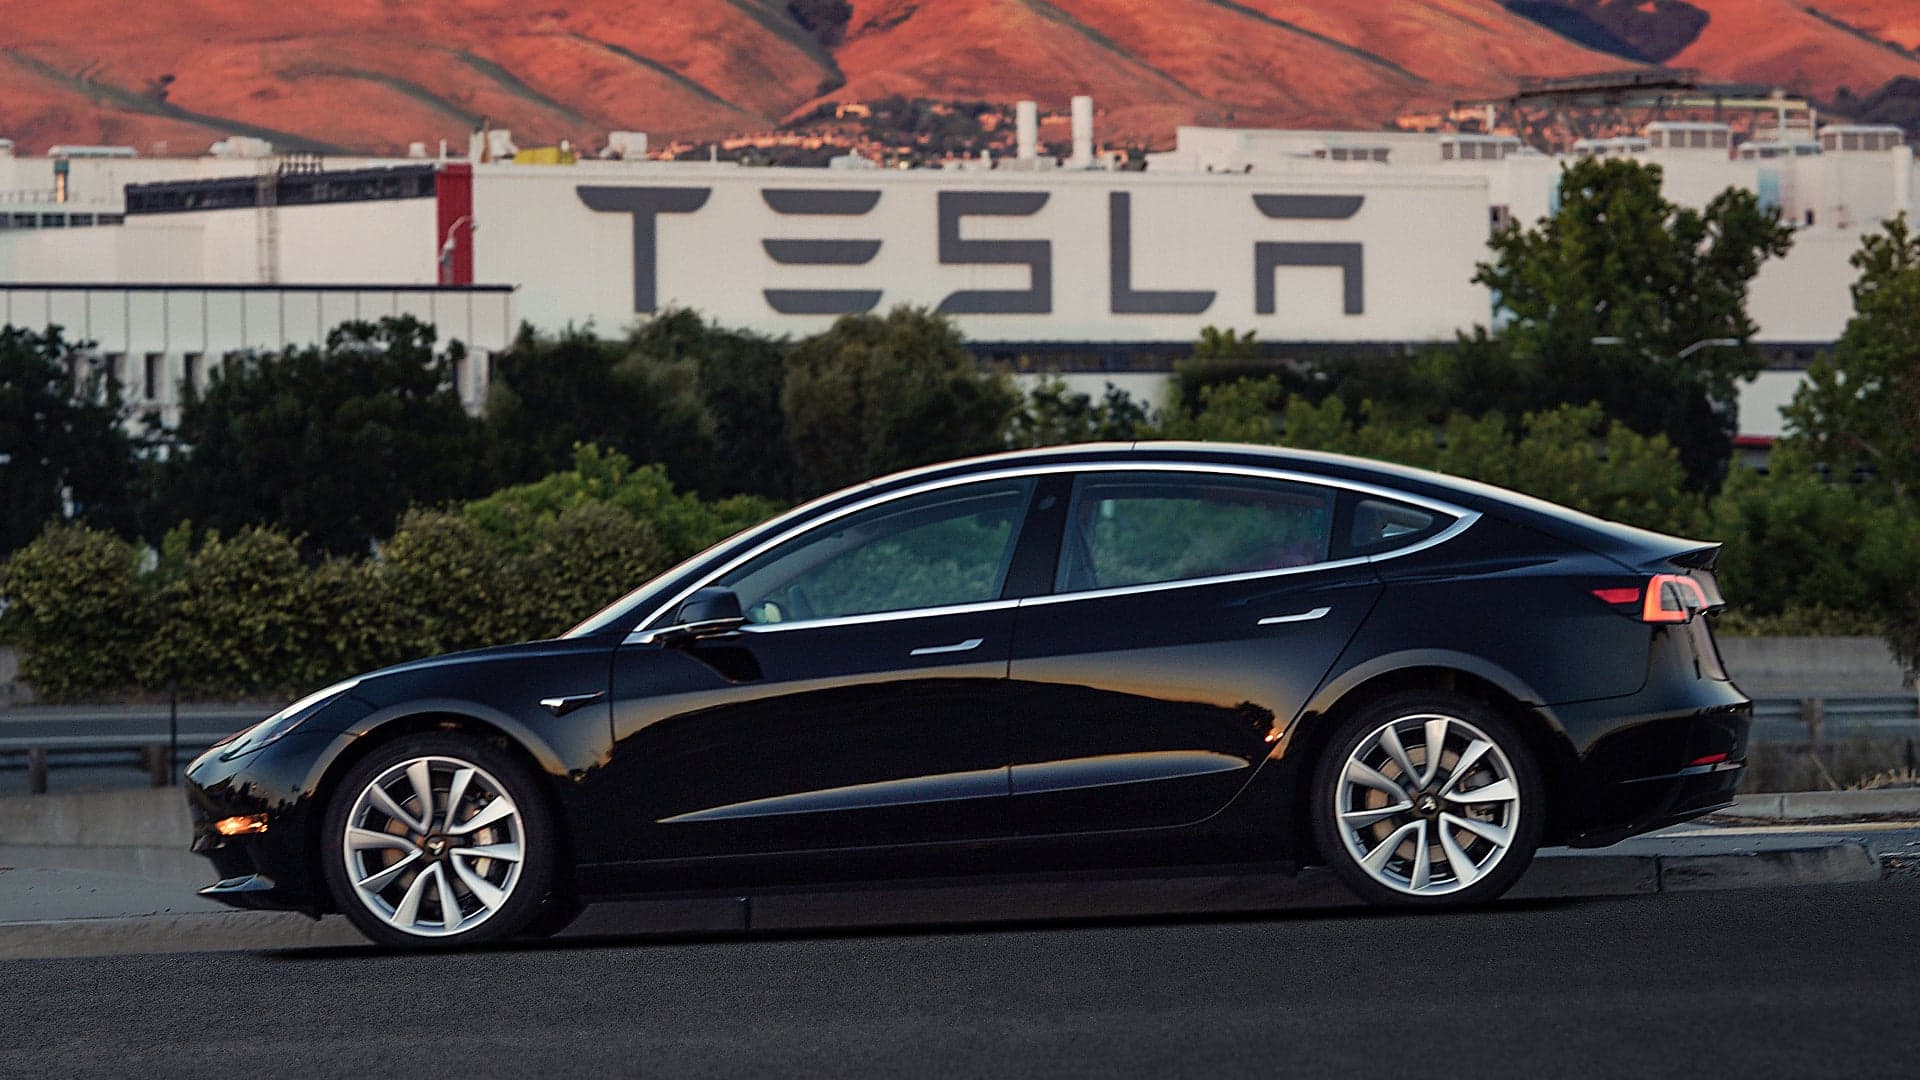 Tesla Model 3 Deposit Holders Getting Anxious Ahead of First Customer Deliveries